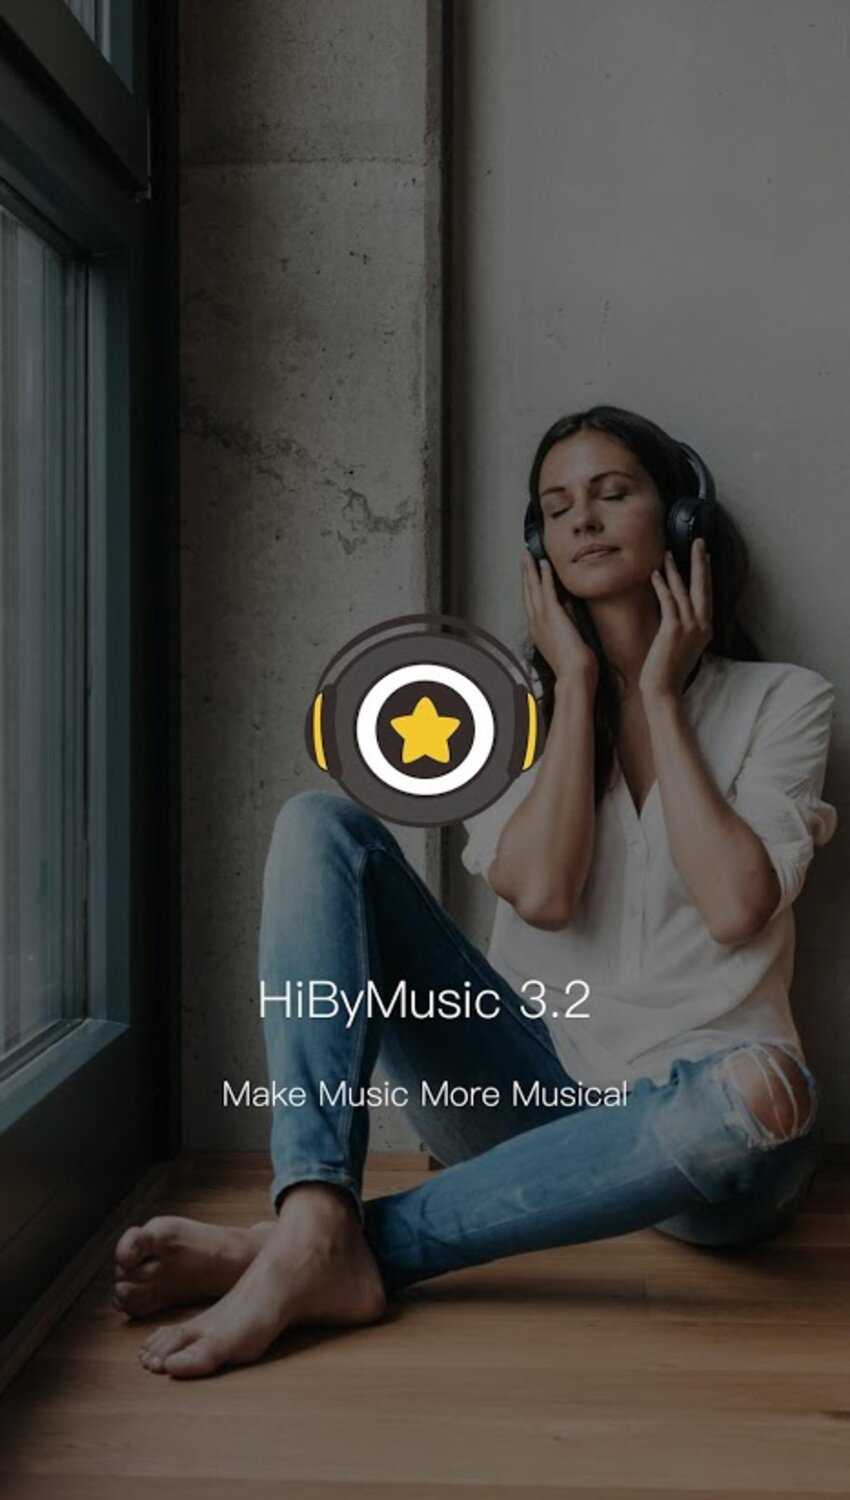 HibyMusic v4.0.1 build 5721 (AdFree) Apk